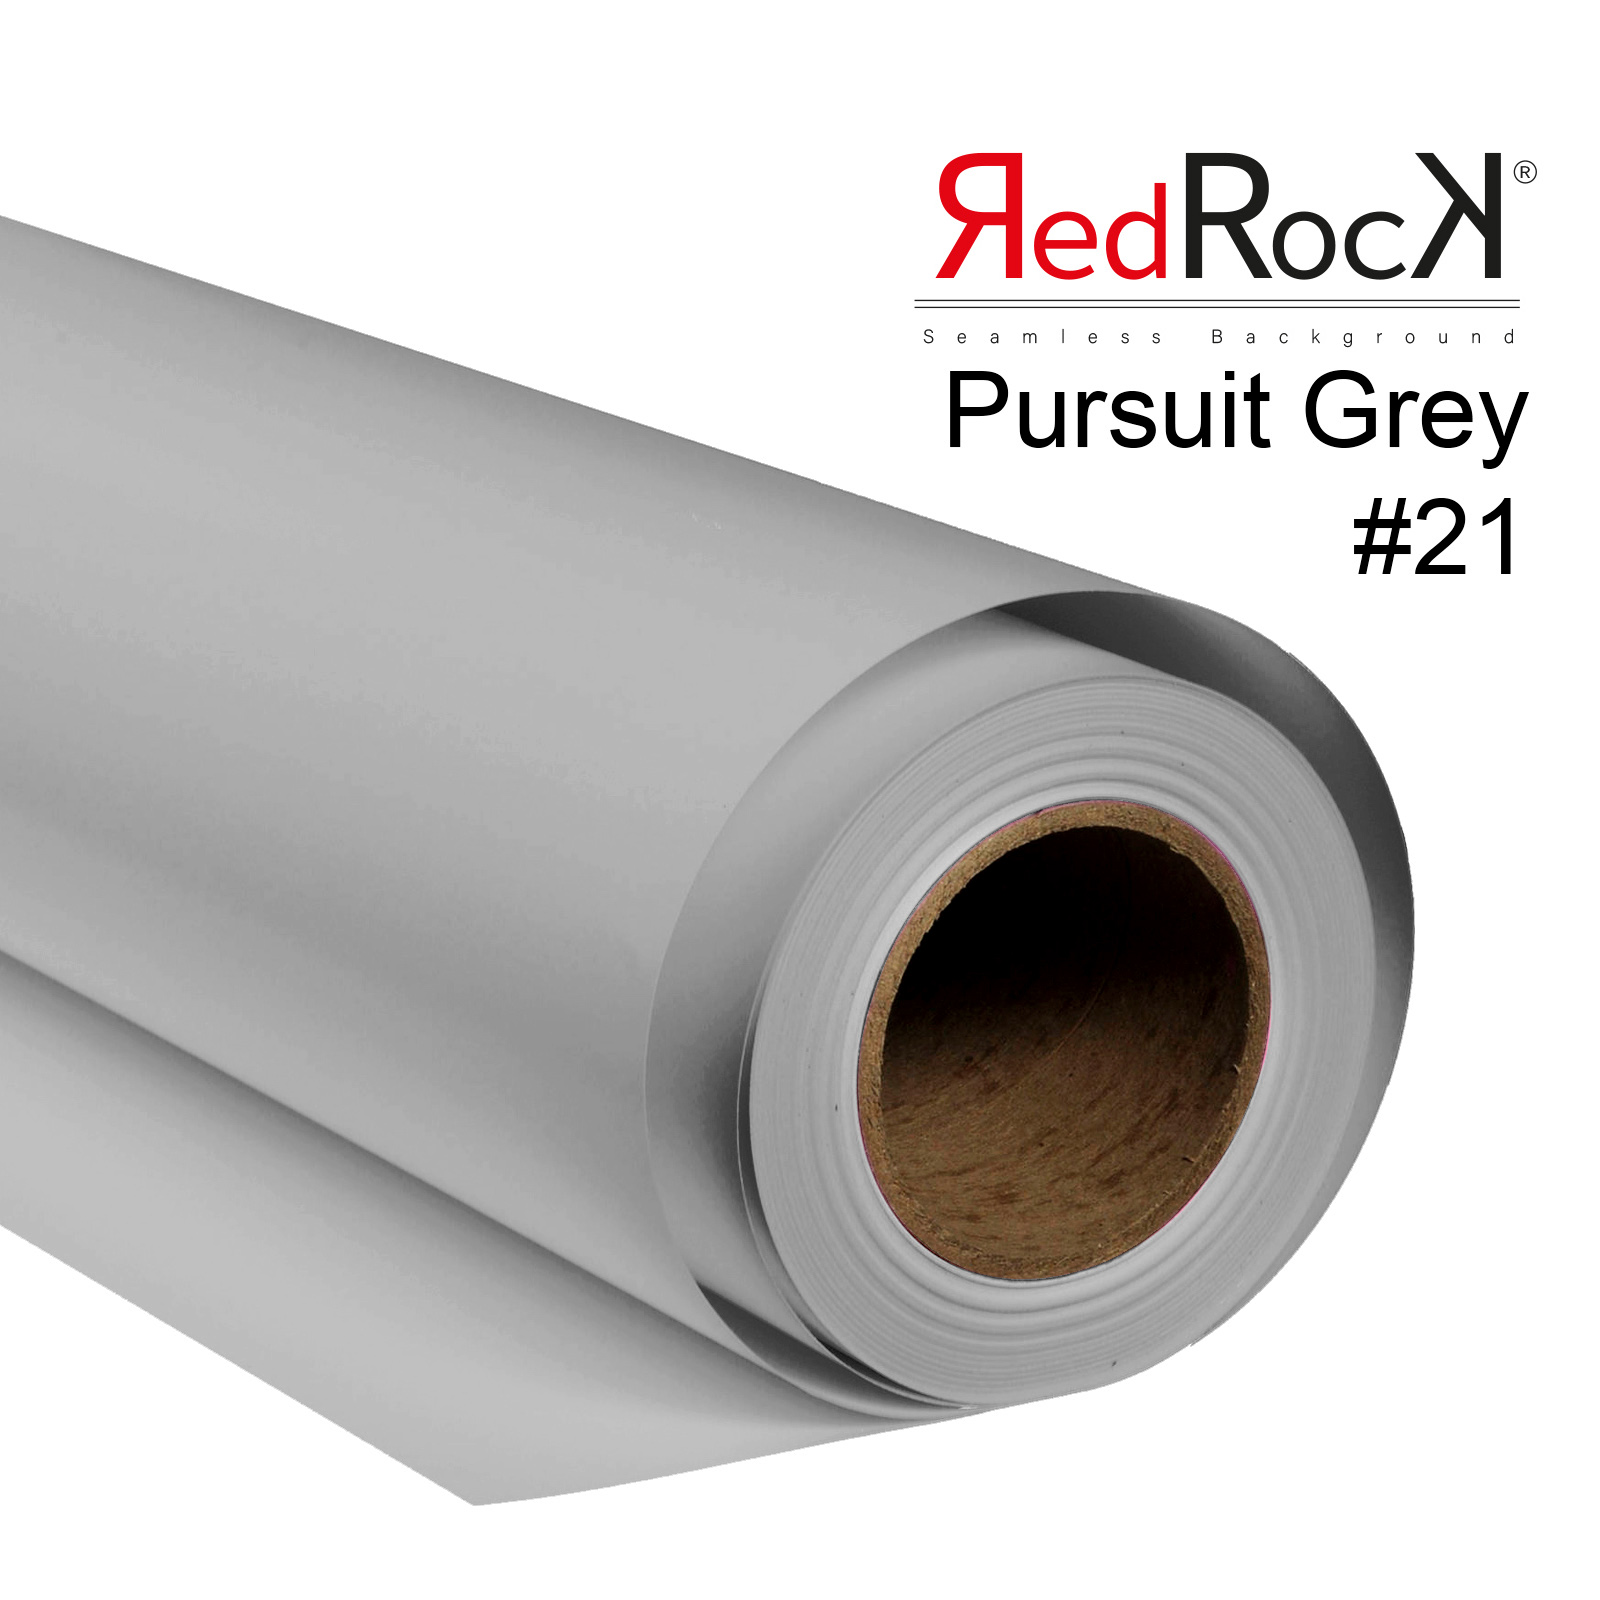 RedRock Pursuit Grey Background Paper 2.72x10m #21